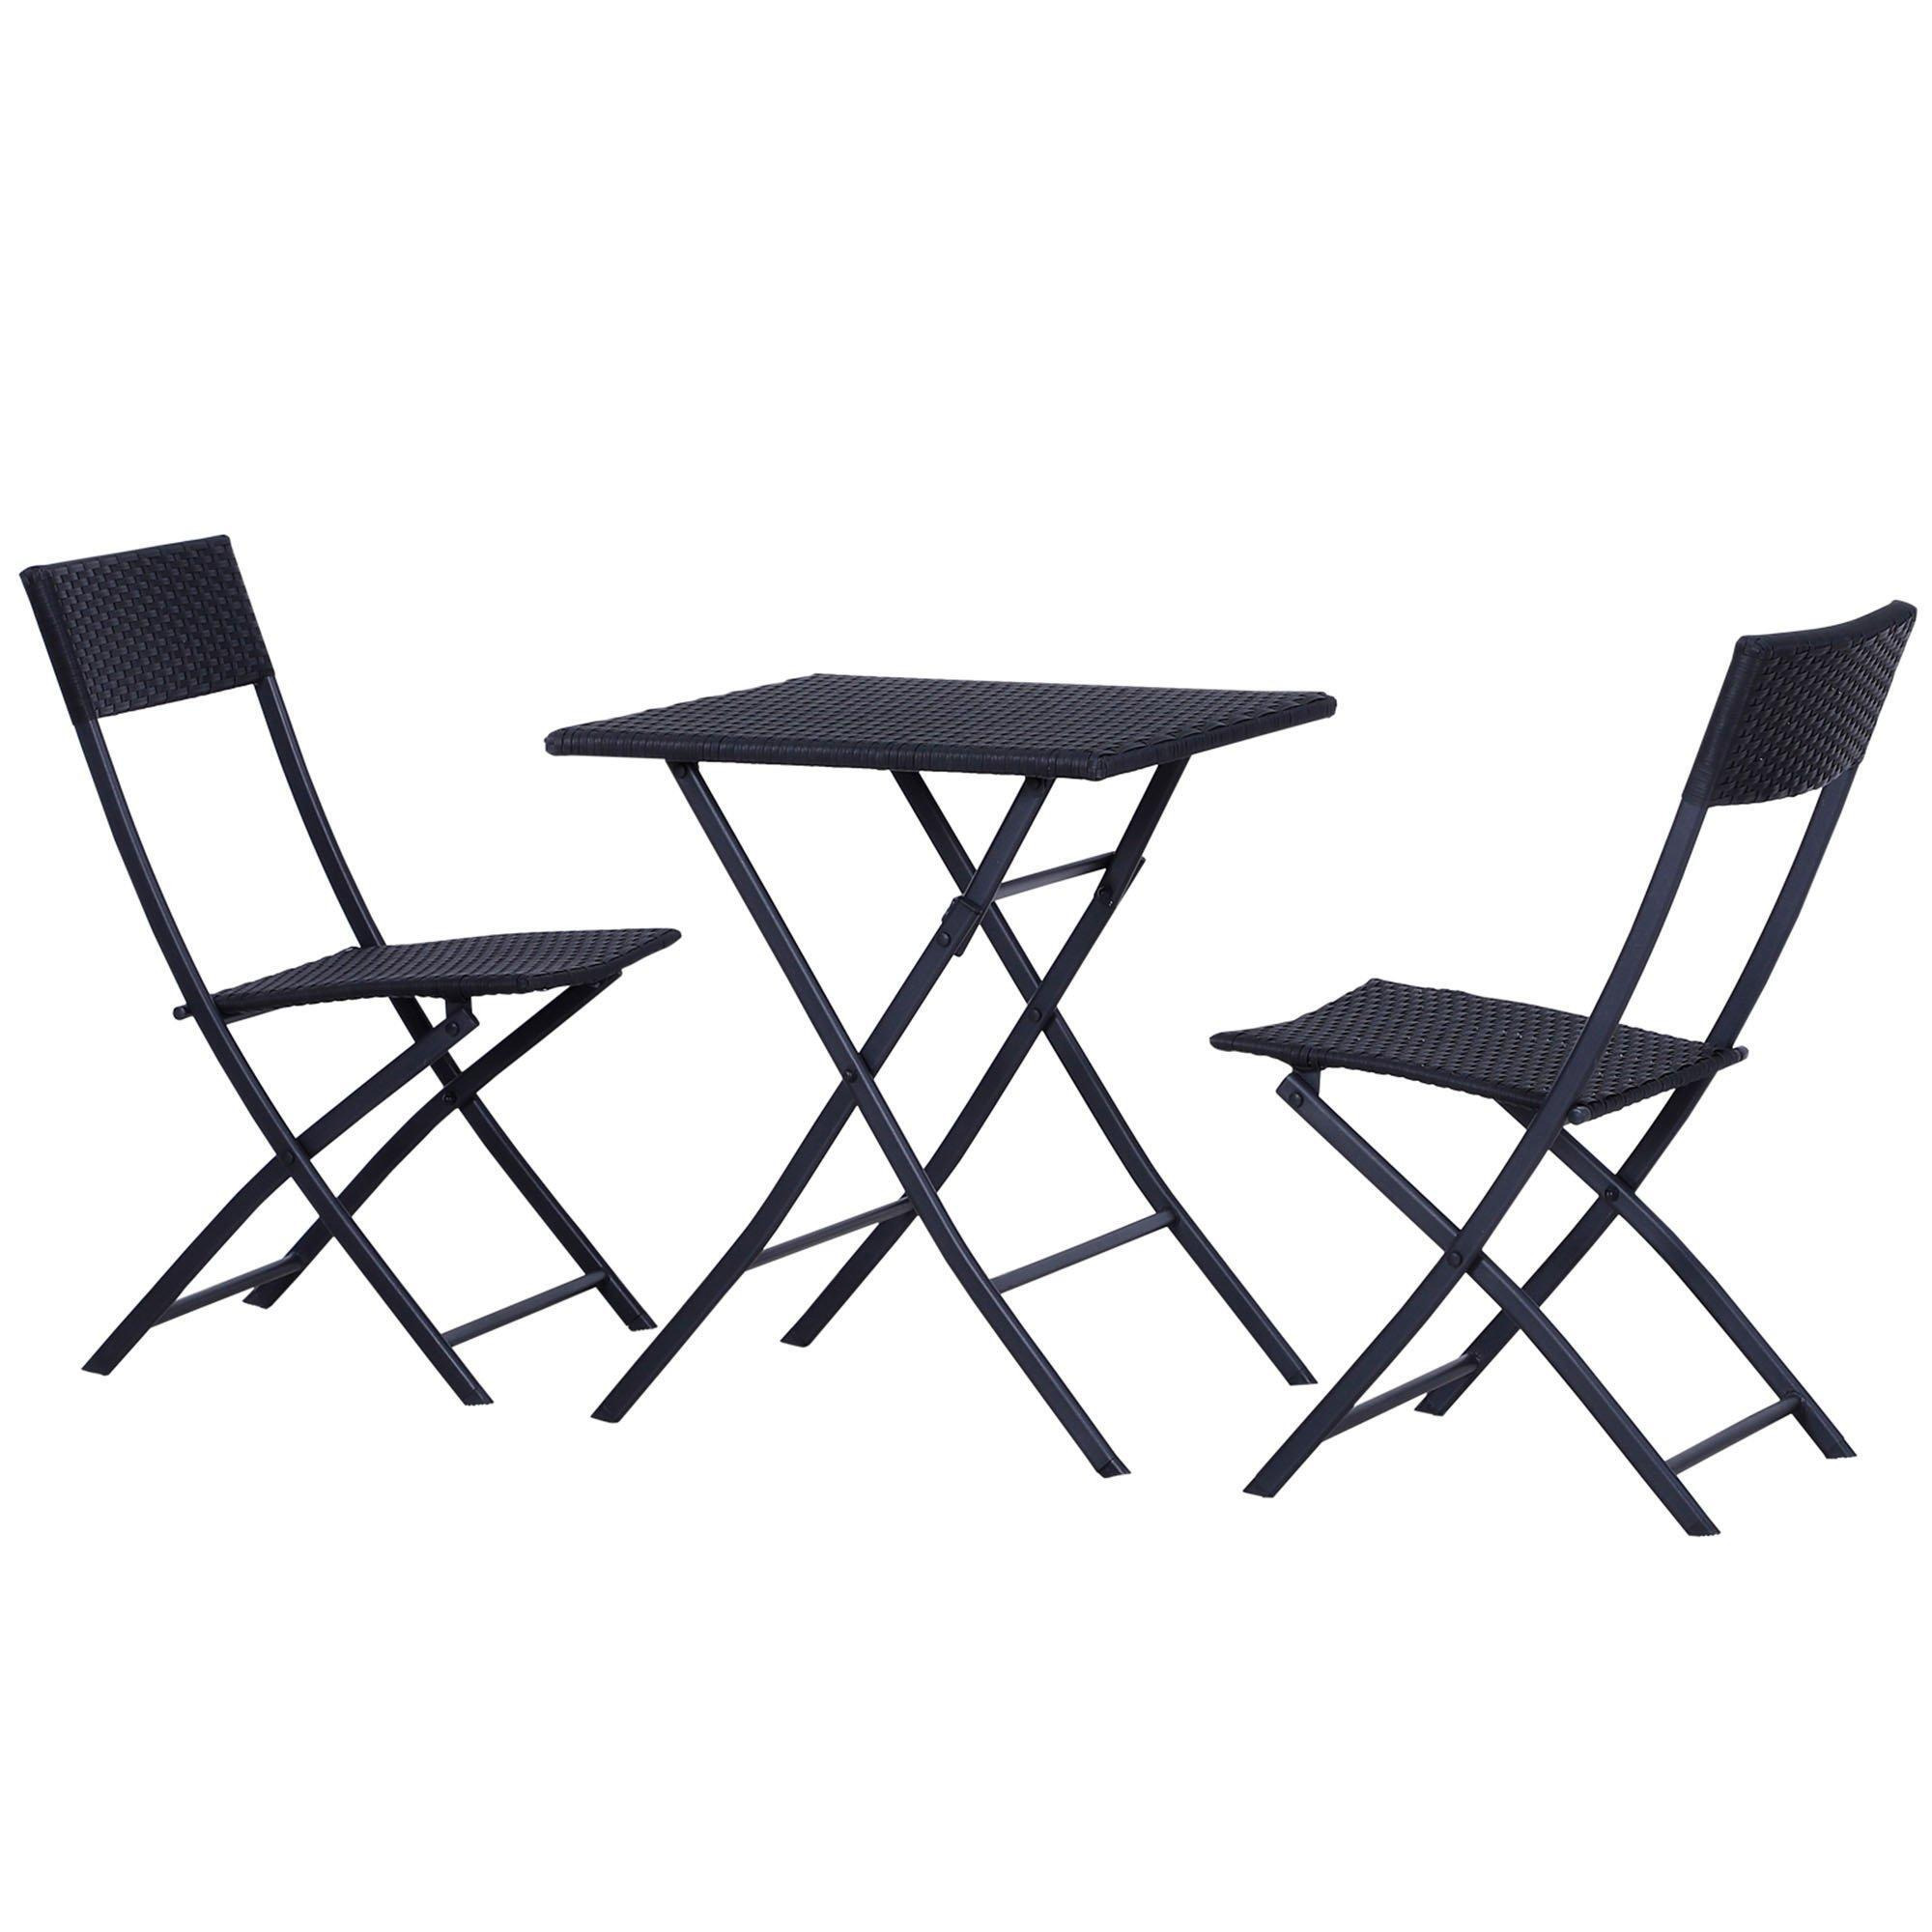 3 PCS Chair Bistro Set Garden Patio Table & Chair Black Rattan Furniture - image 1